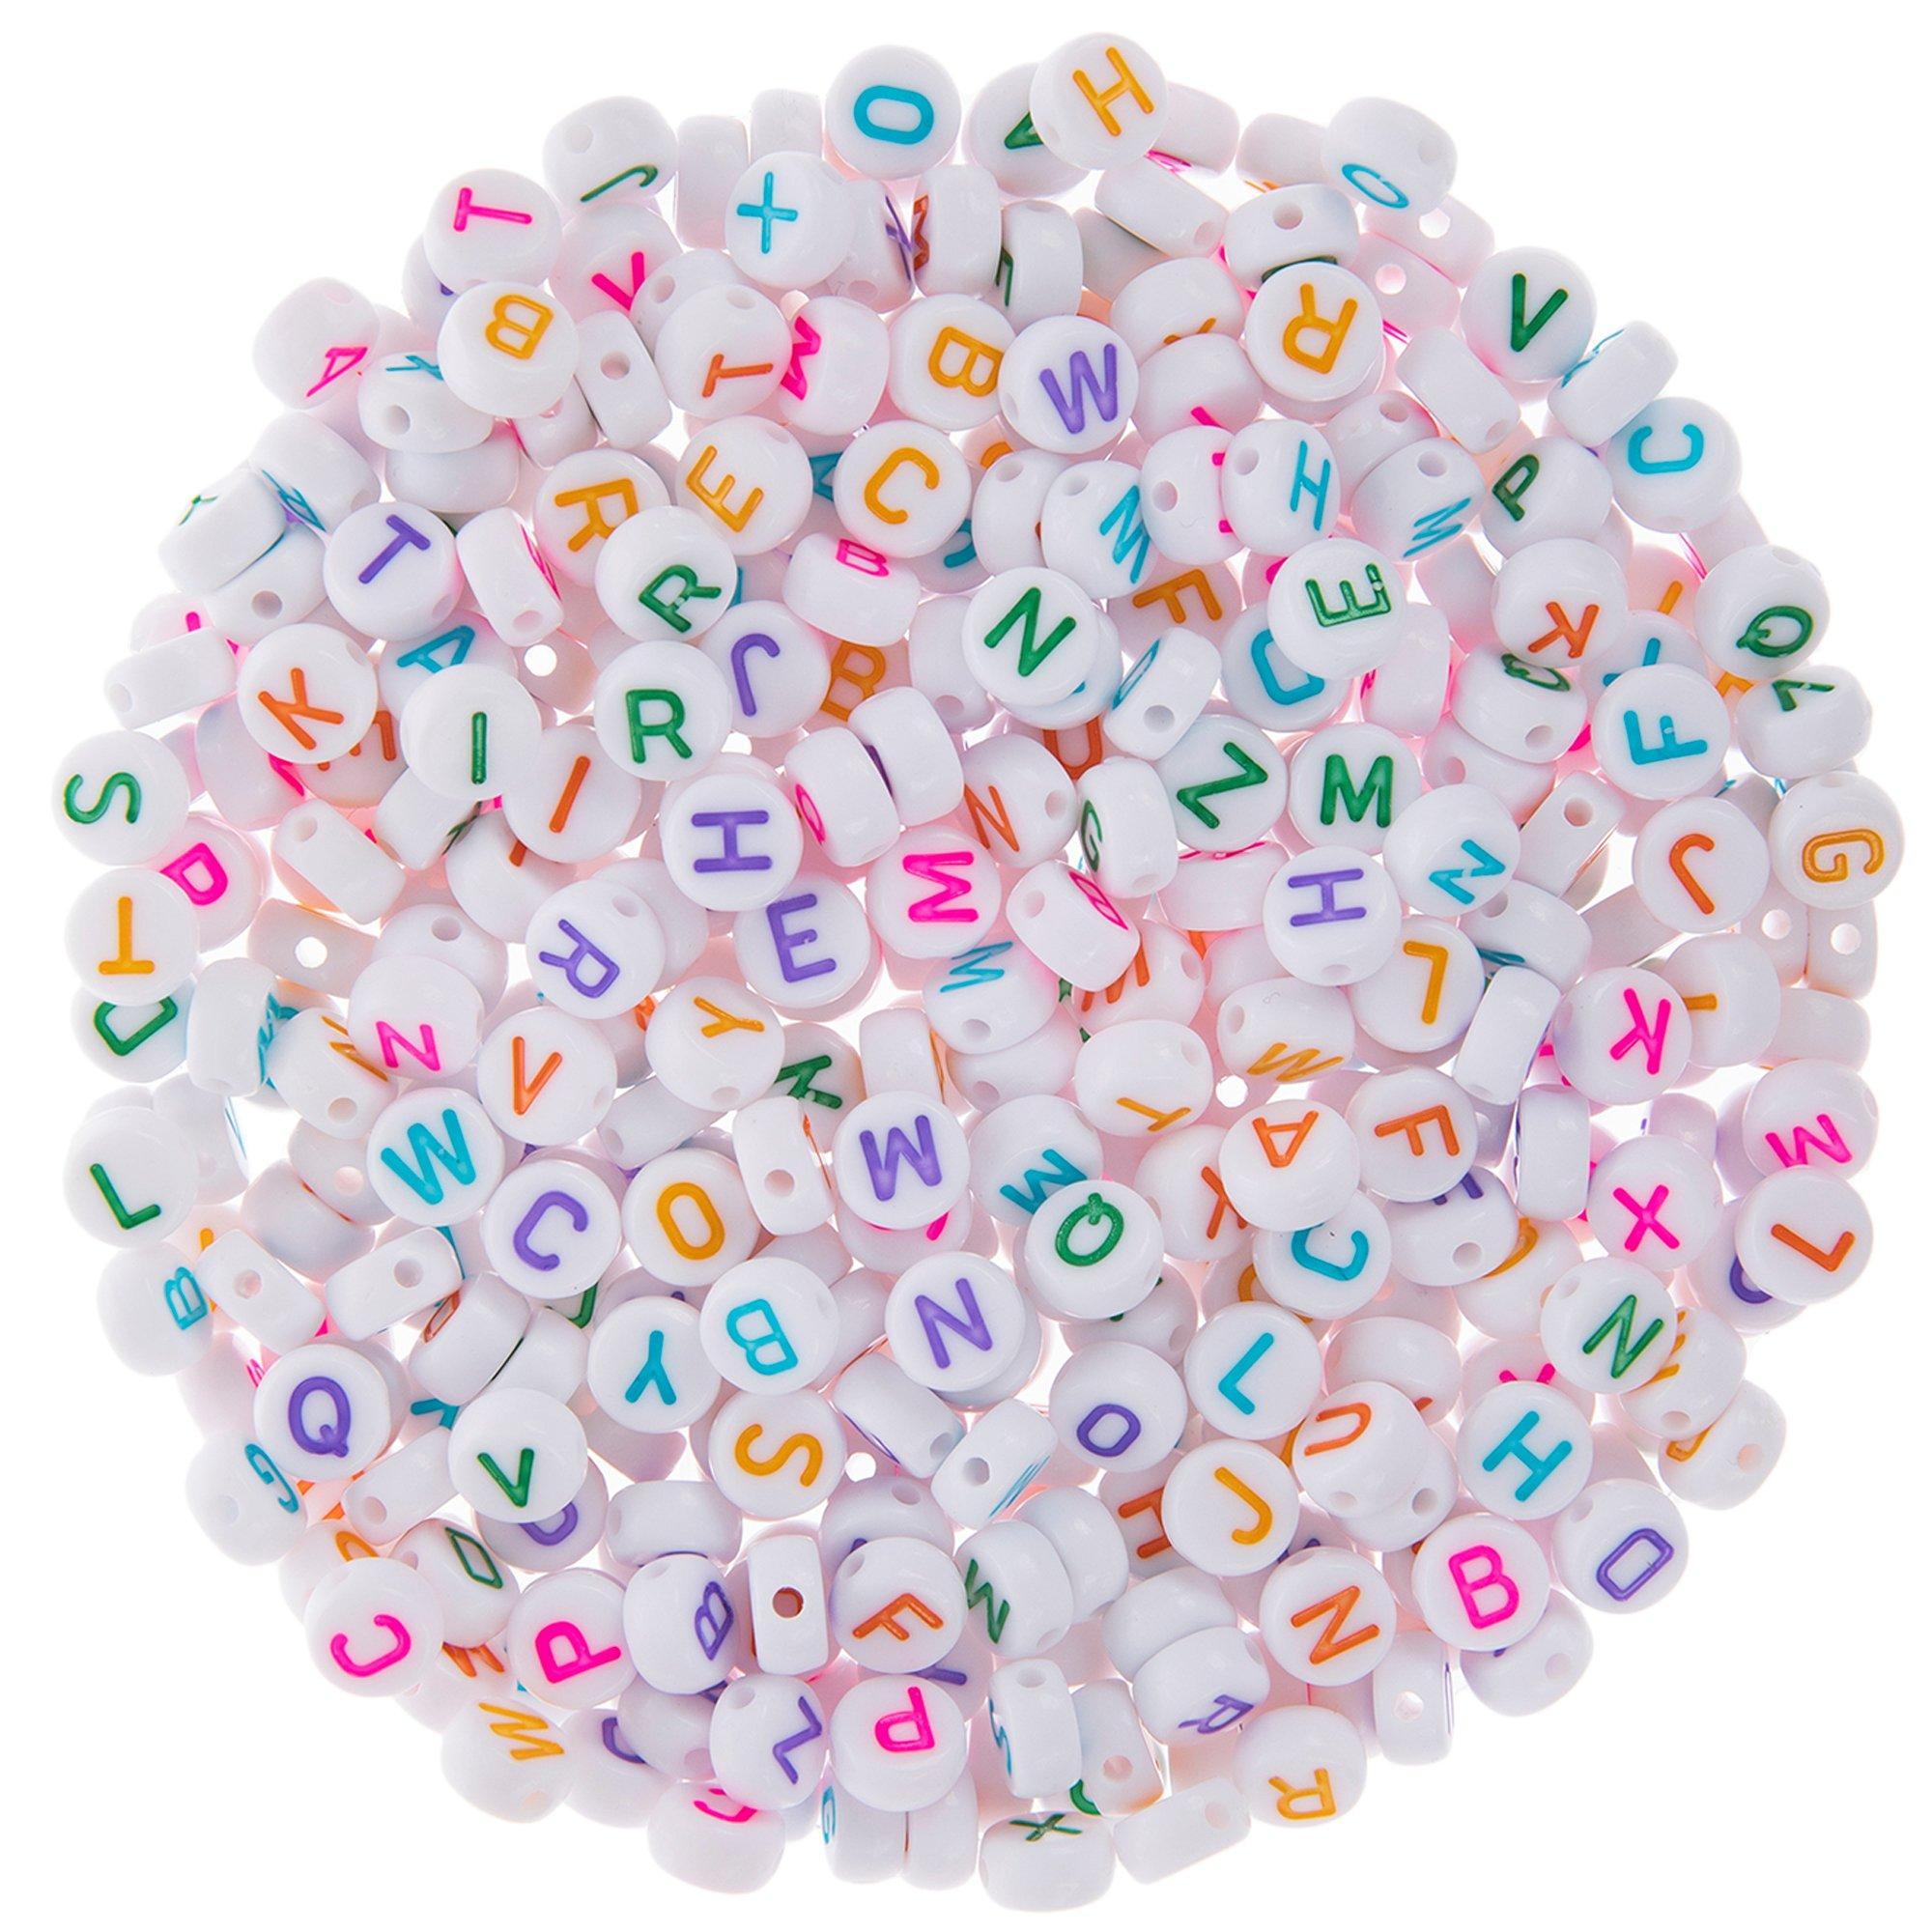 Craft Medley Alphabet Beads